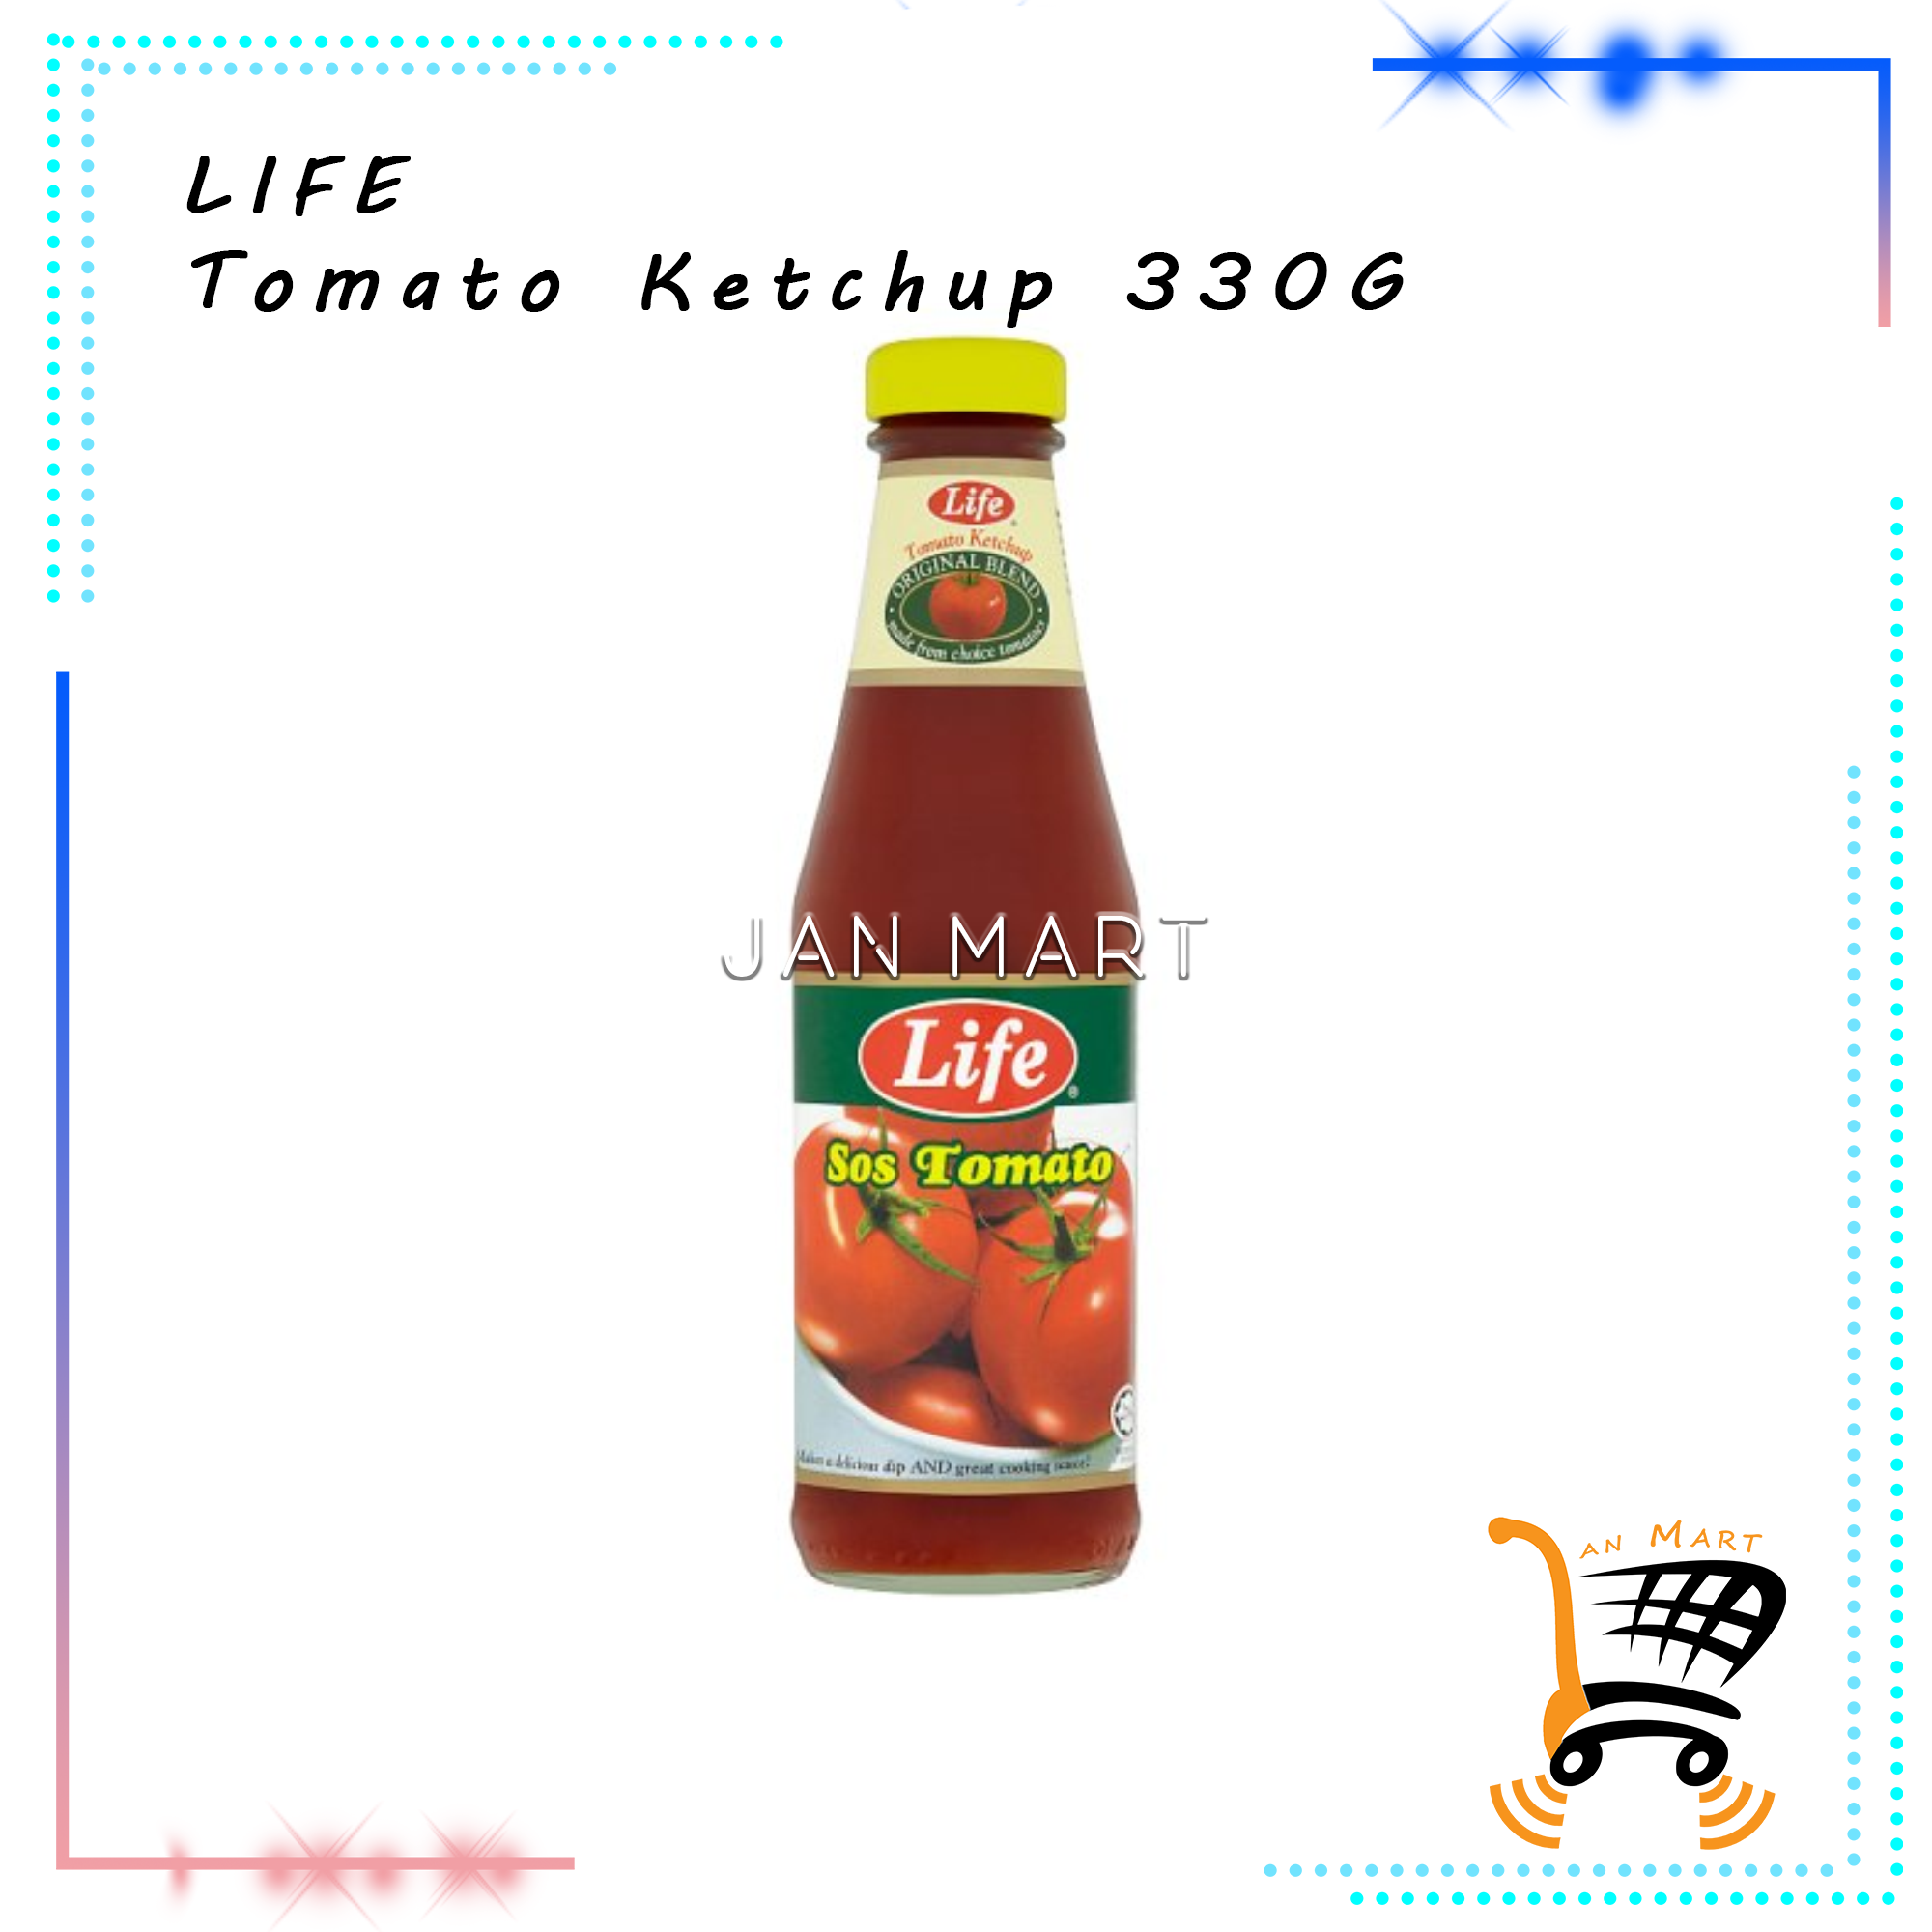 LIFE Tomato Ketchup 330G